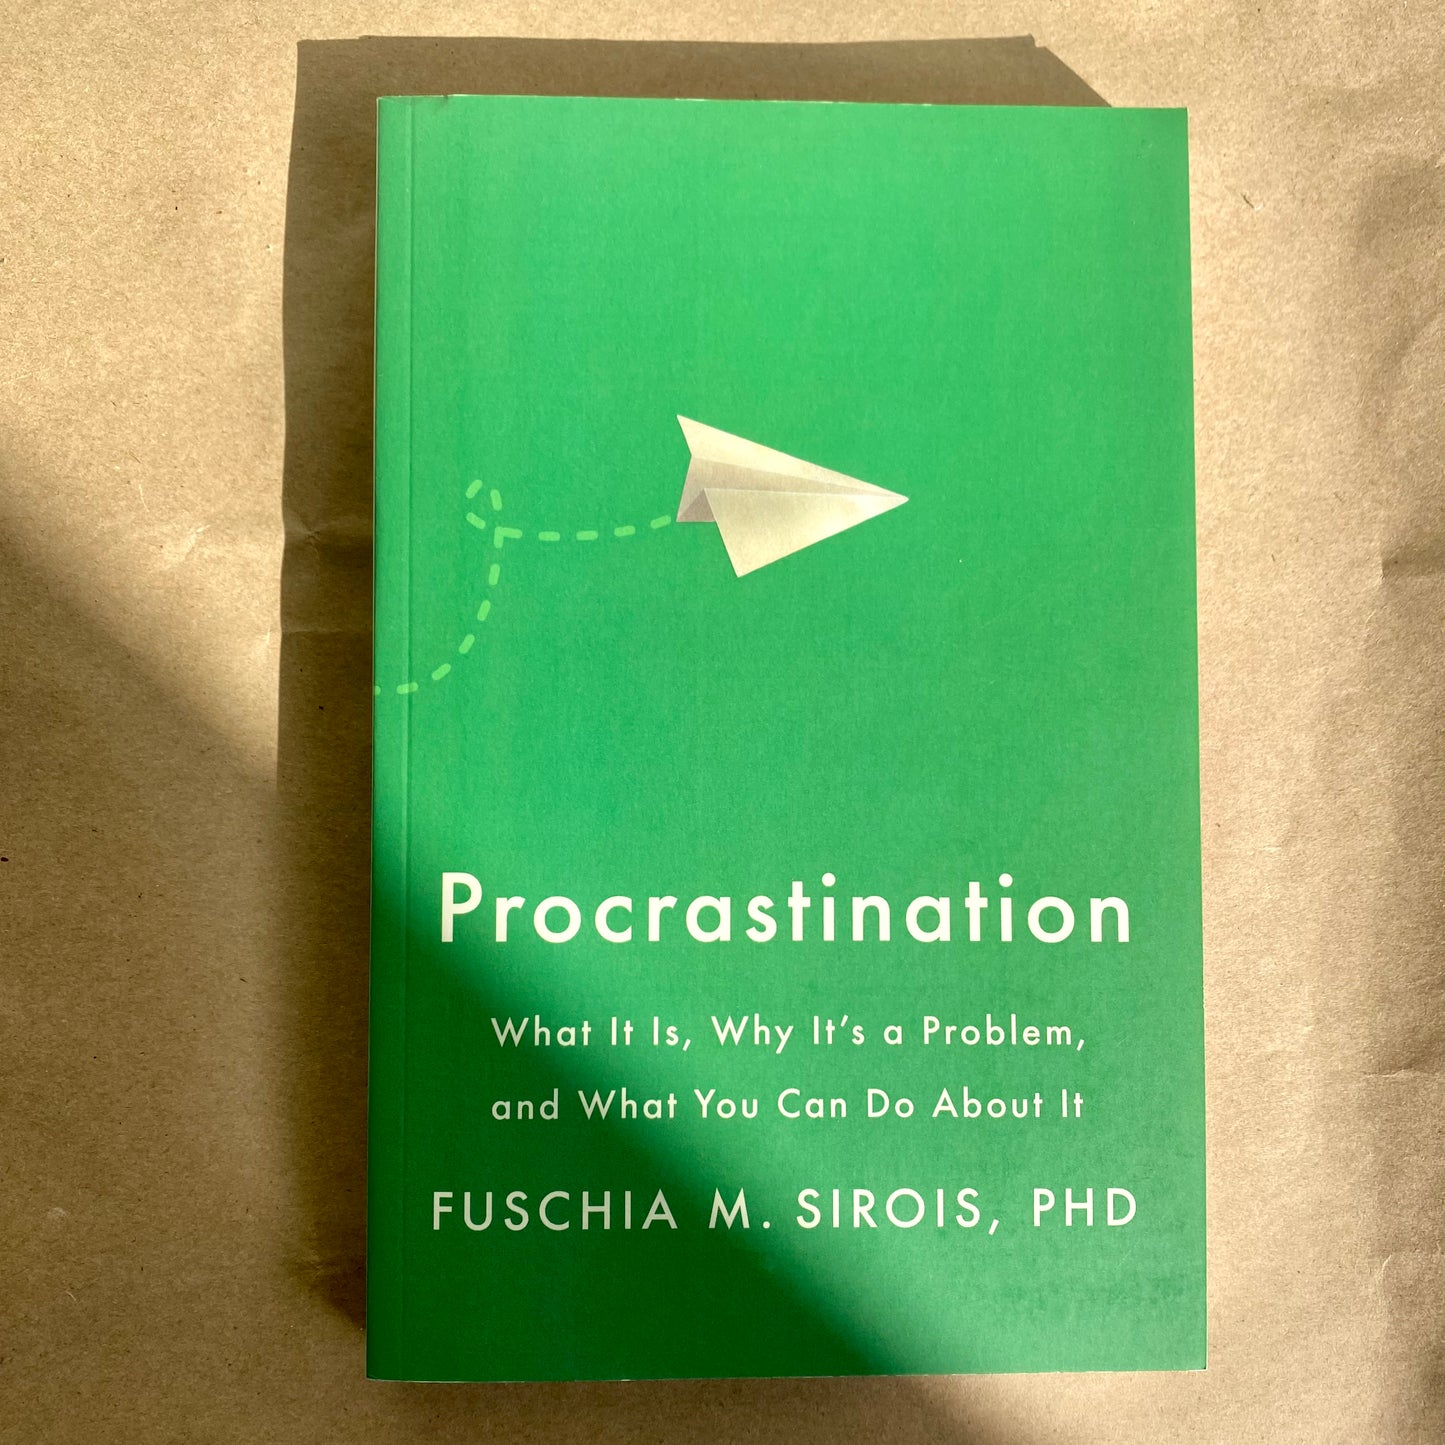 Procrastination by Fuschia M. Sirois